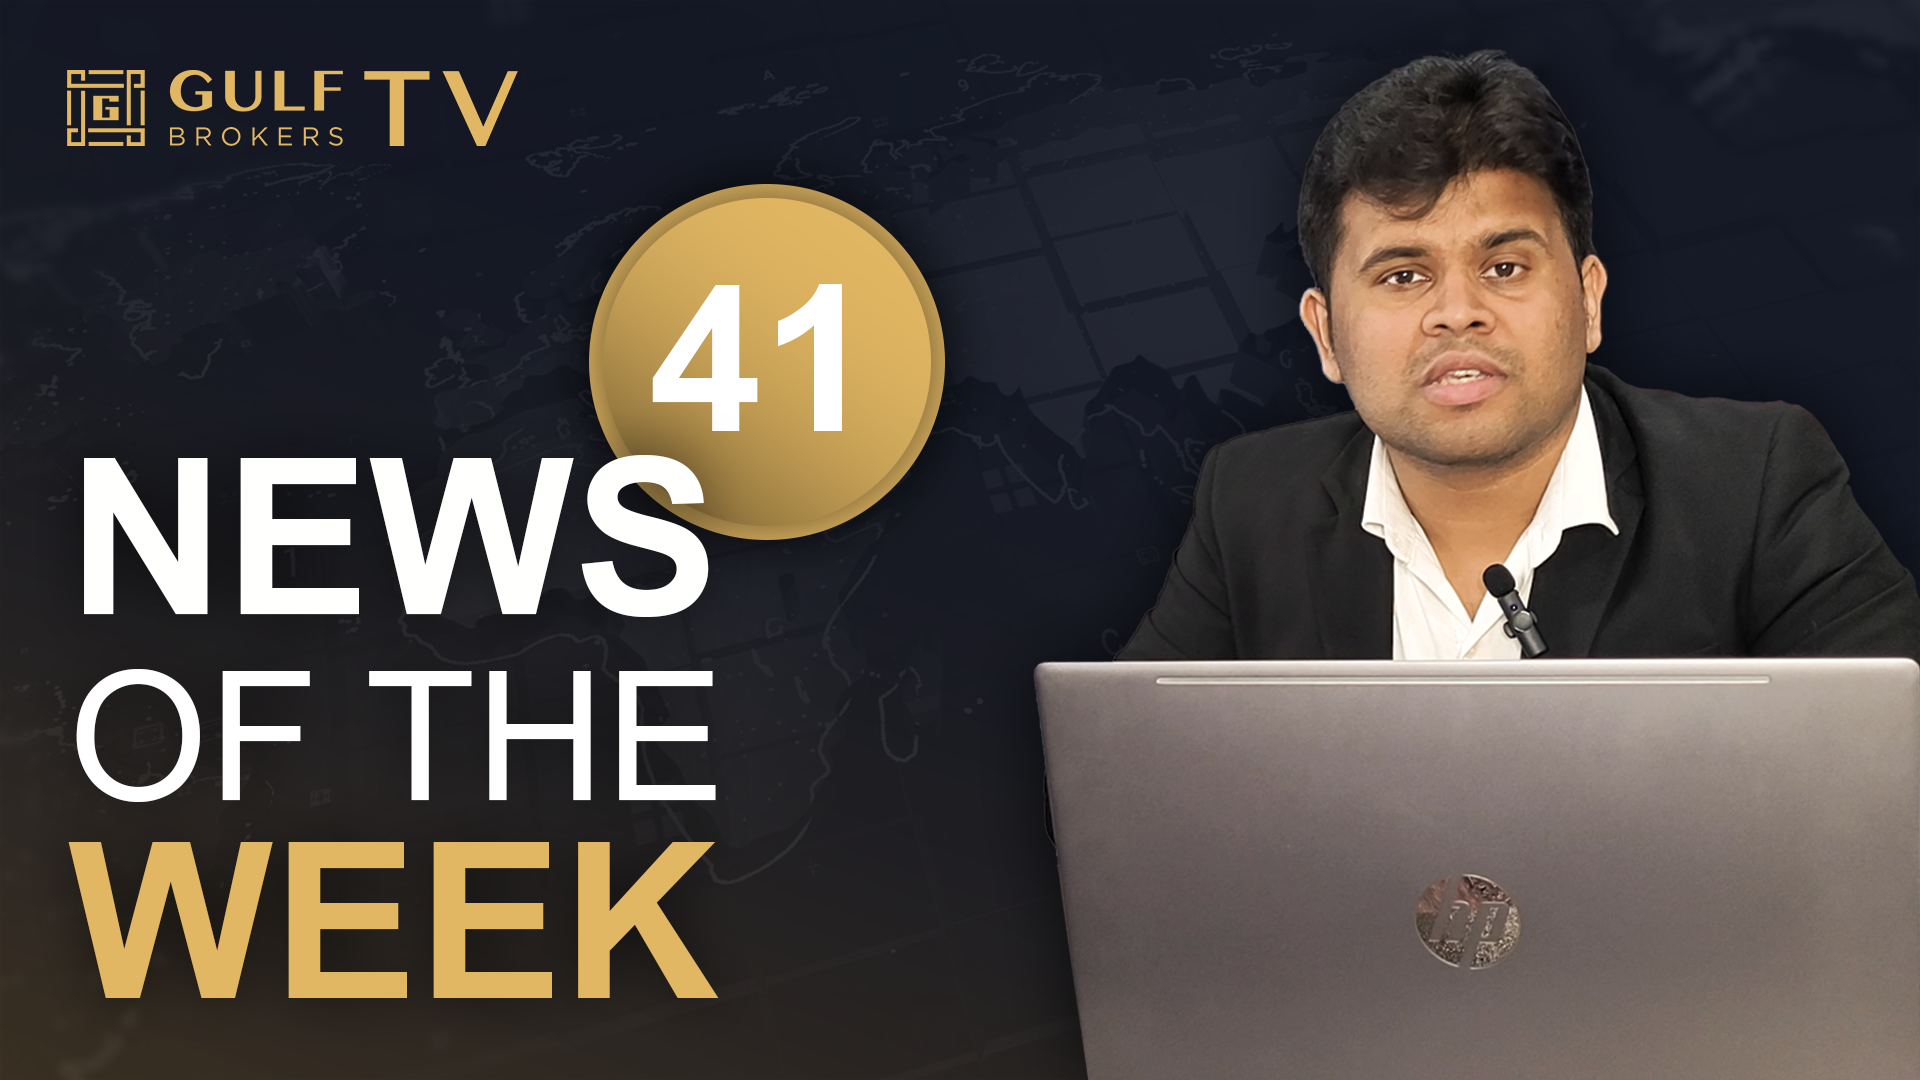 Gulfbrokers | Gulf Brokers | News of the week 41 | Syam KP